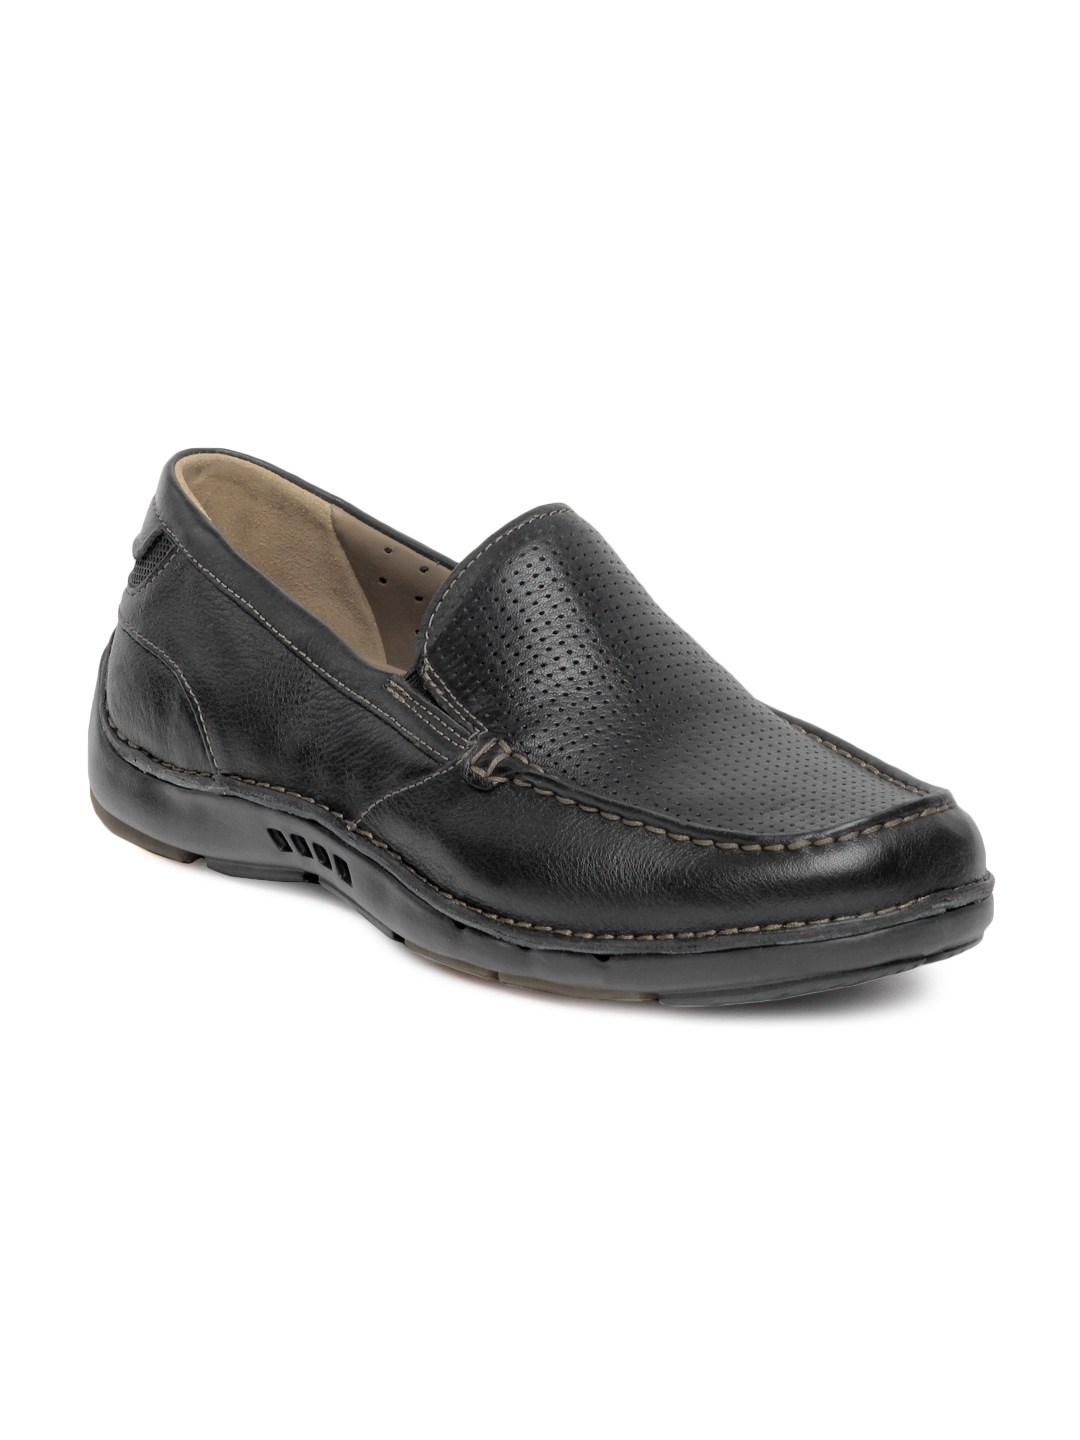 Buy Clarks Men Black Shoes - Casual Shoes for Men 57947 | Myntra